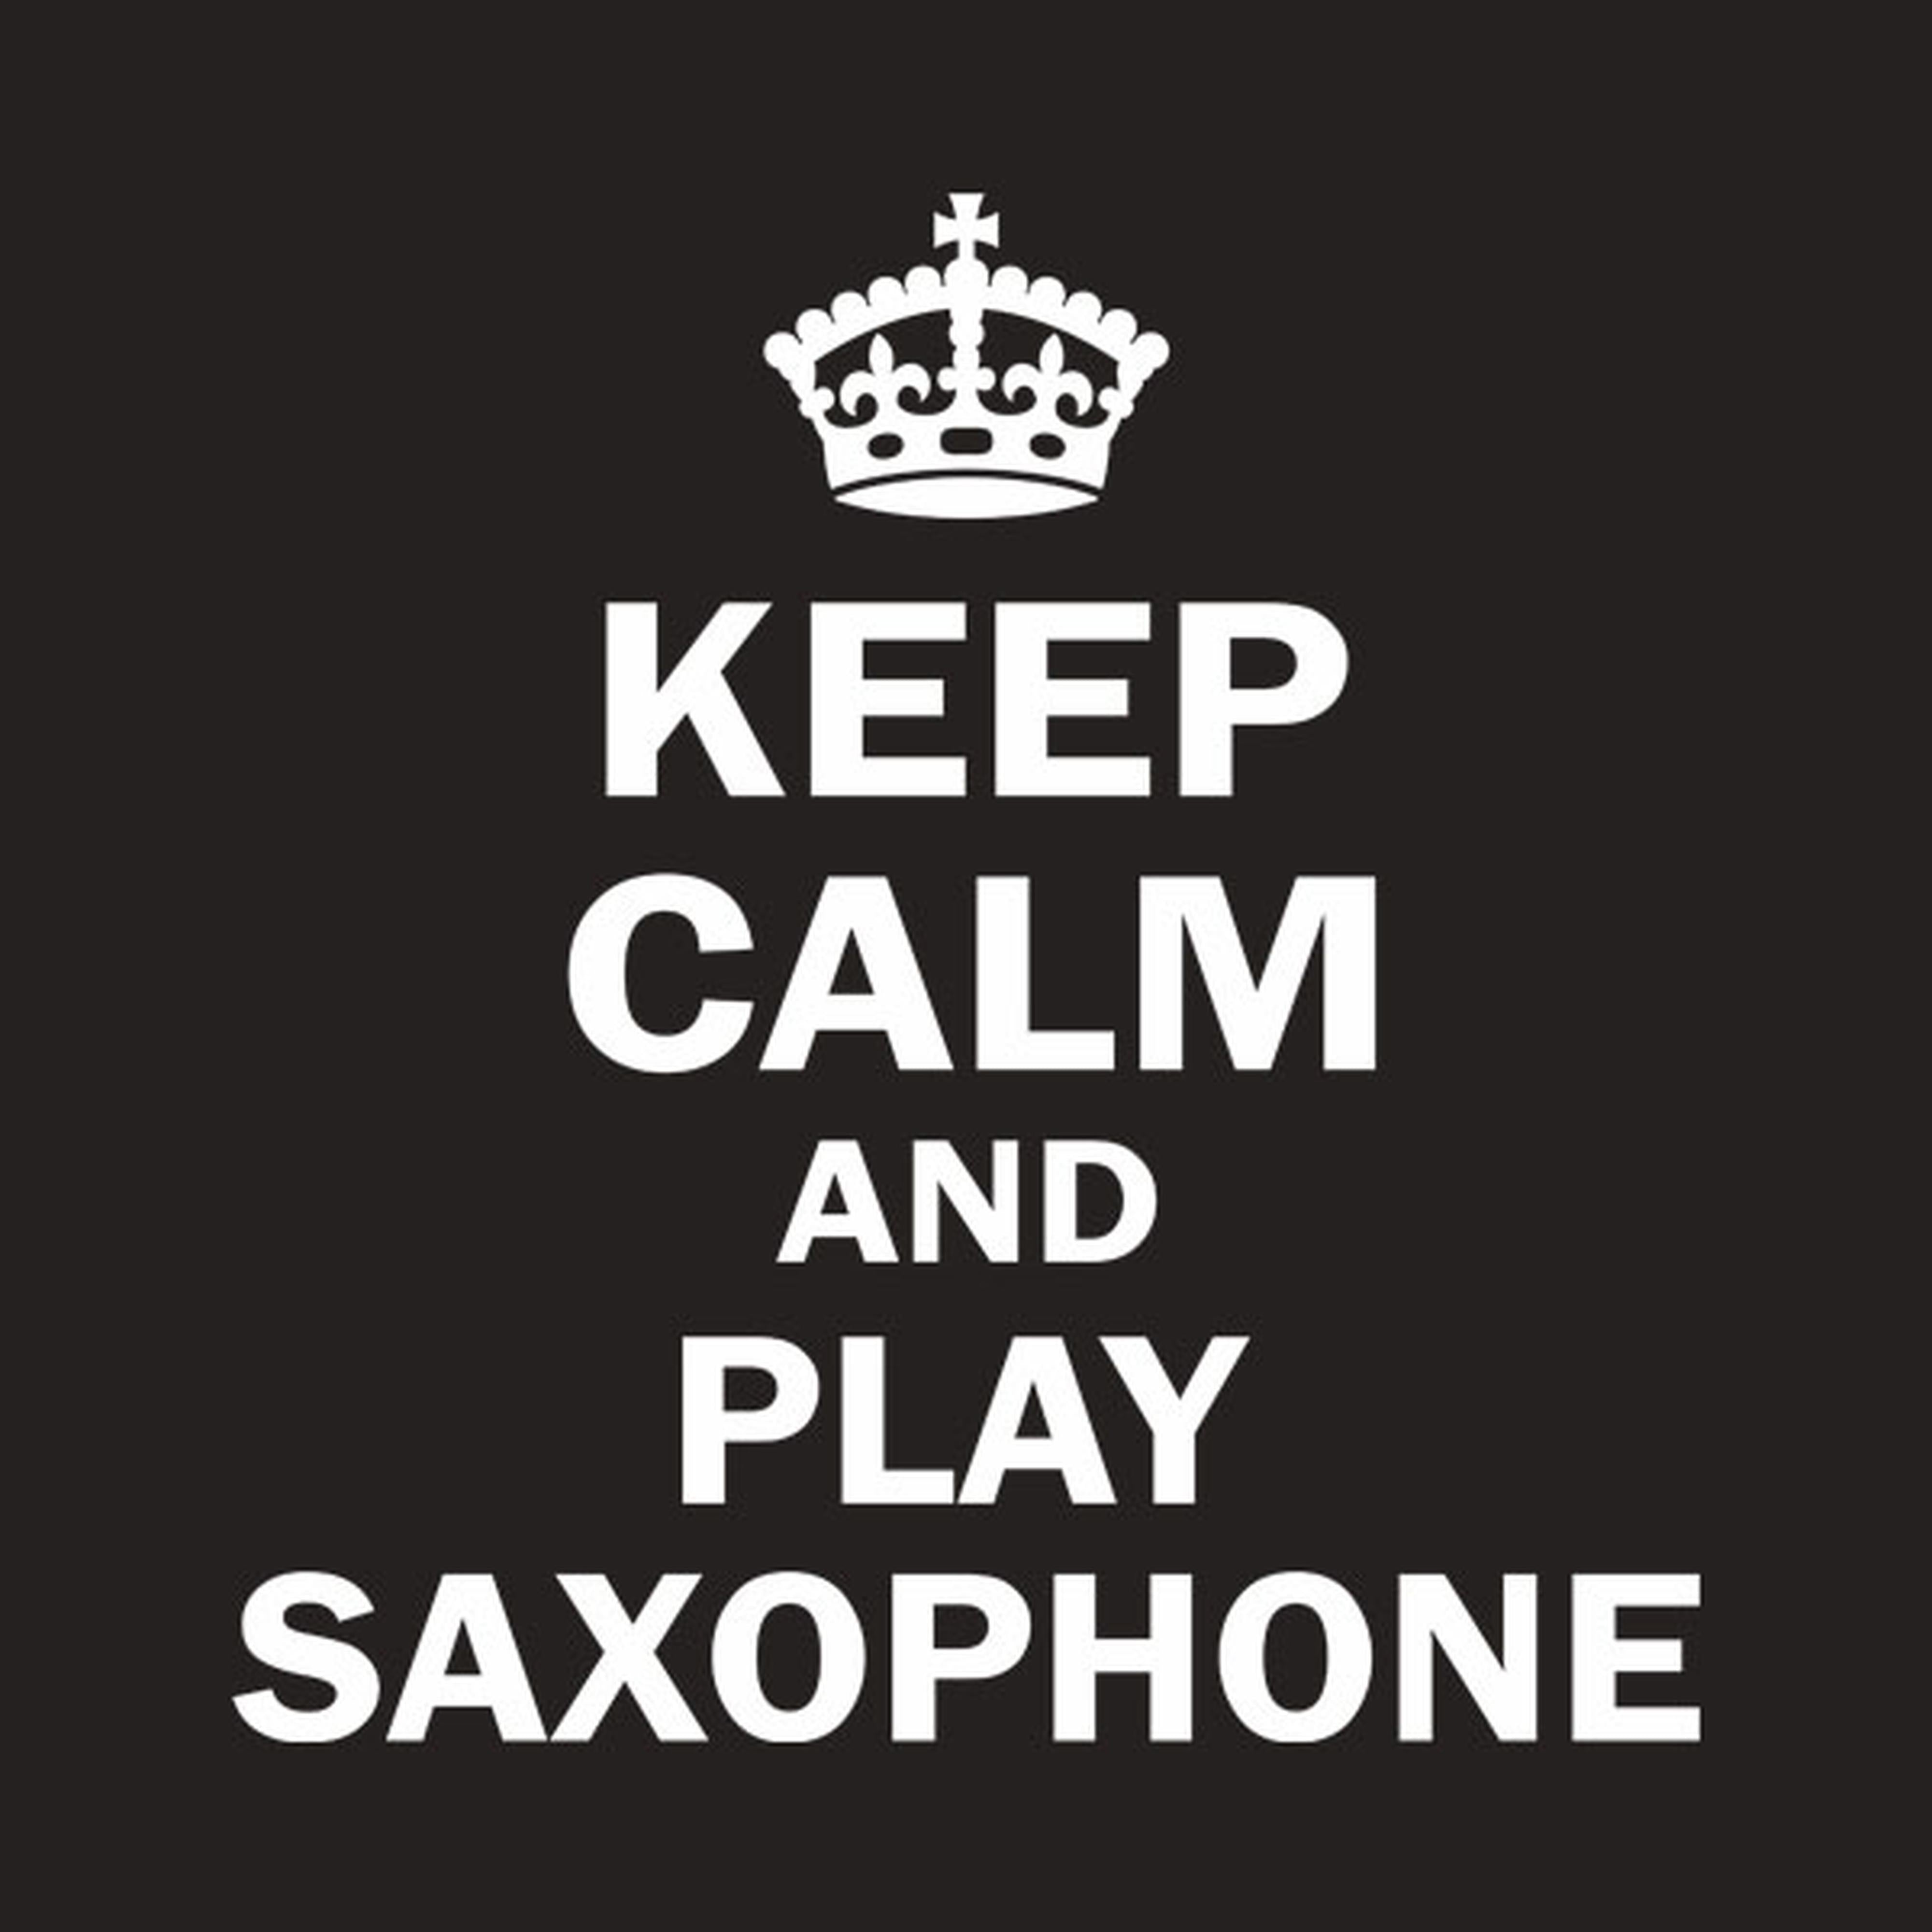 Keep calm and play saxophone